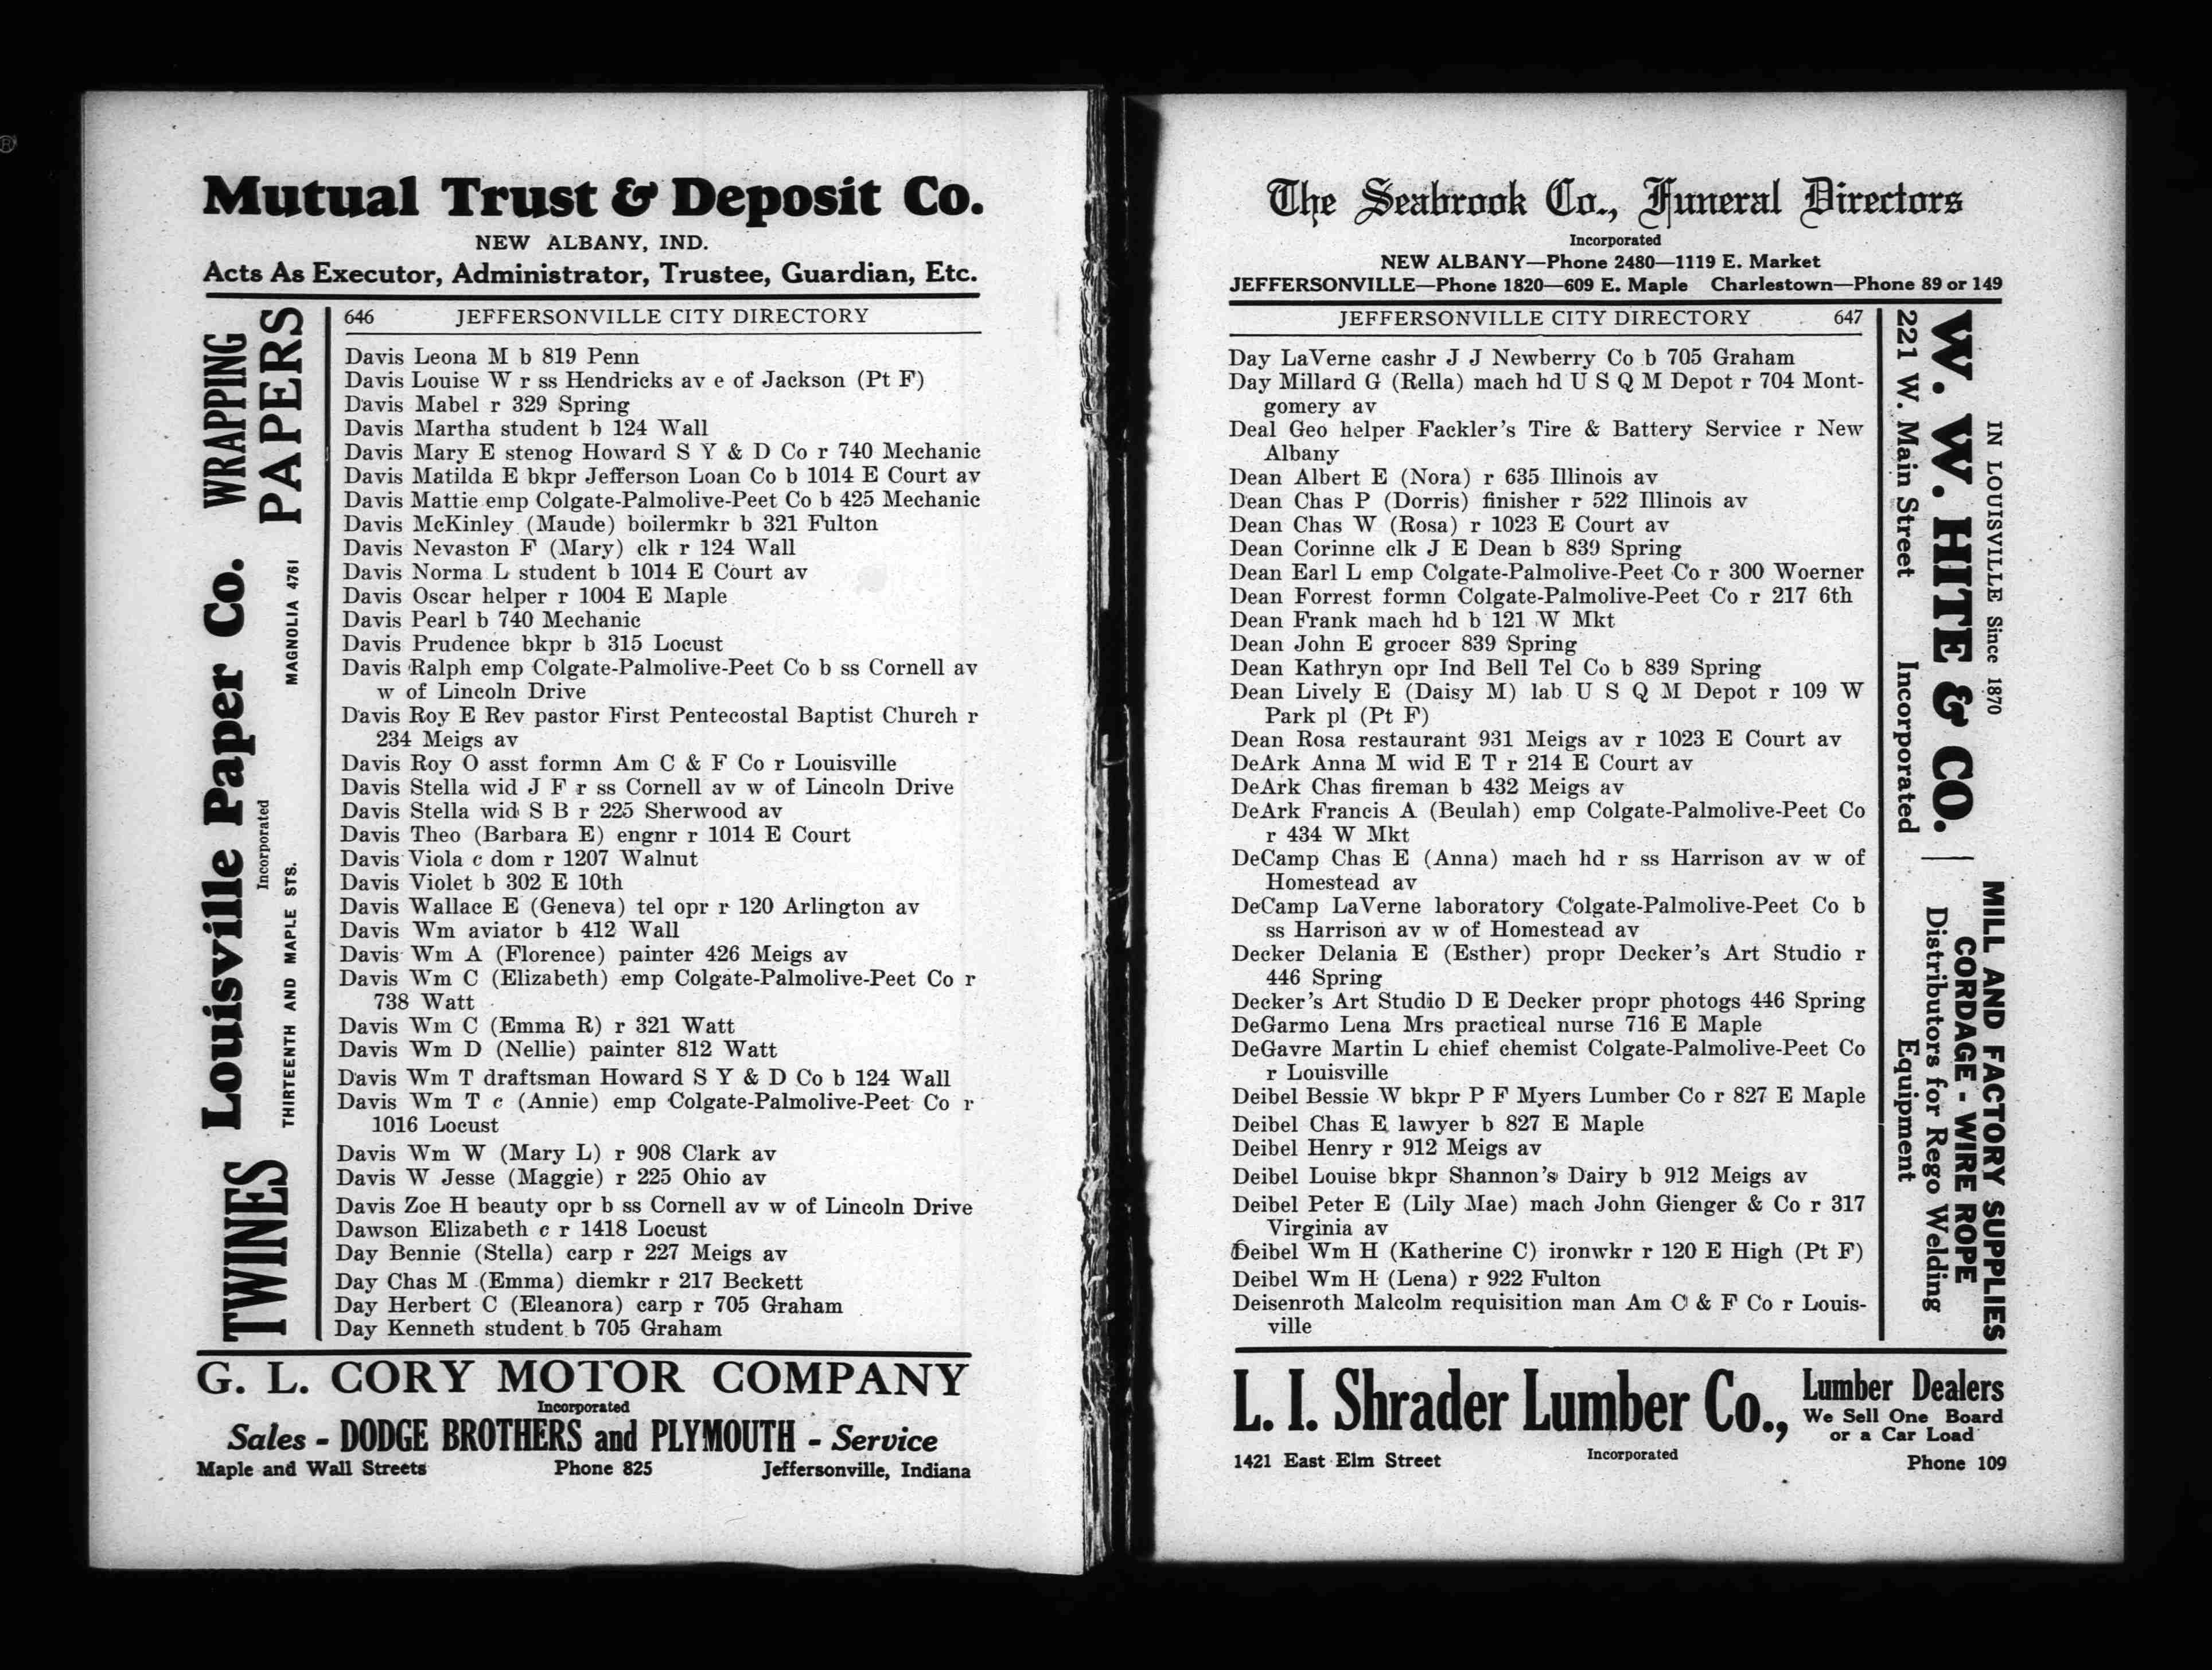 Roy Davis' 1931/1932 City Directory entry